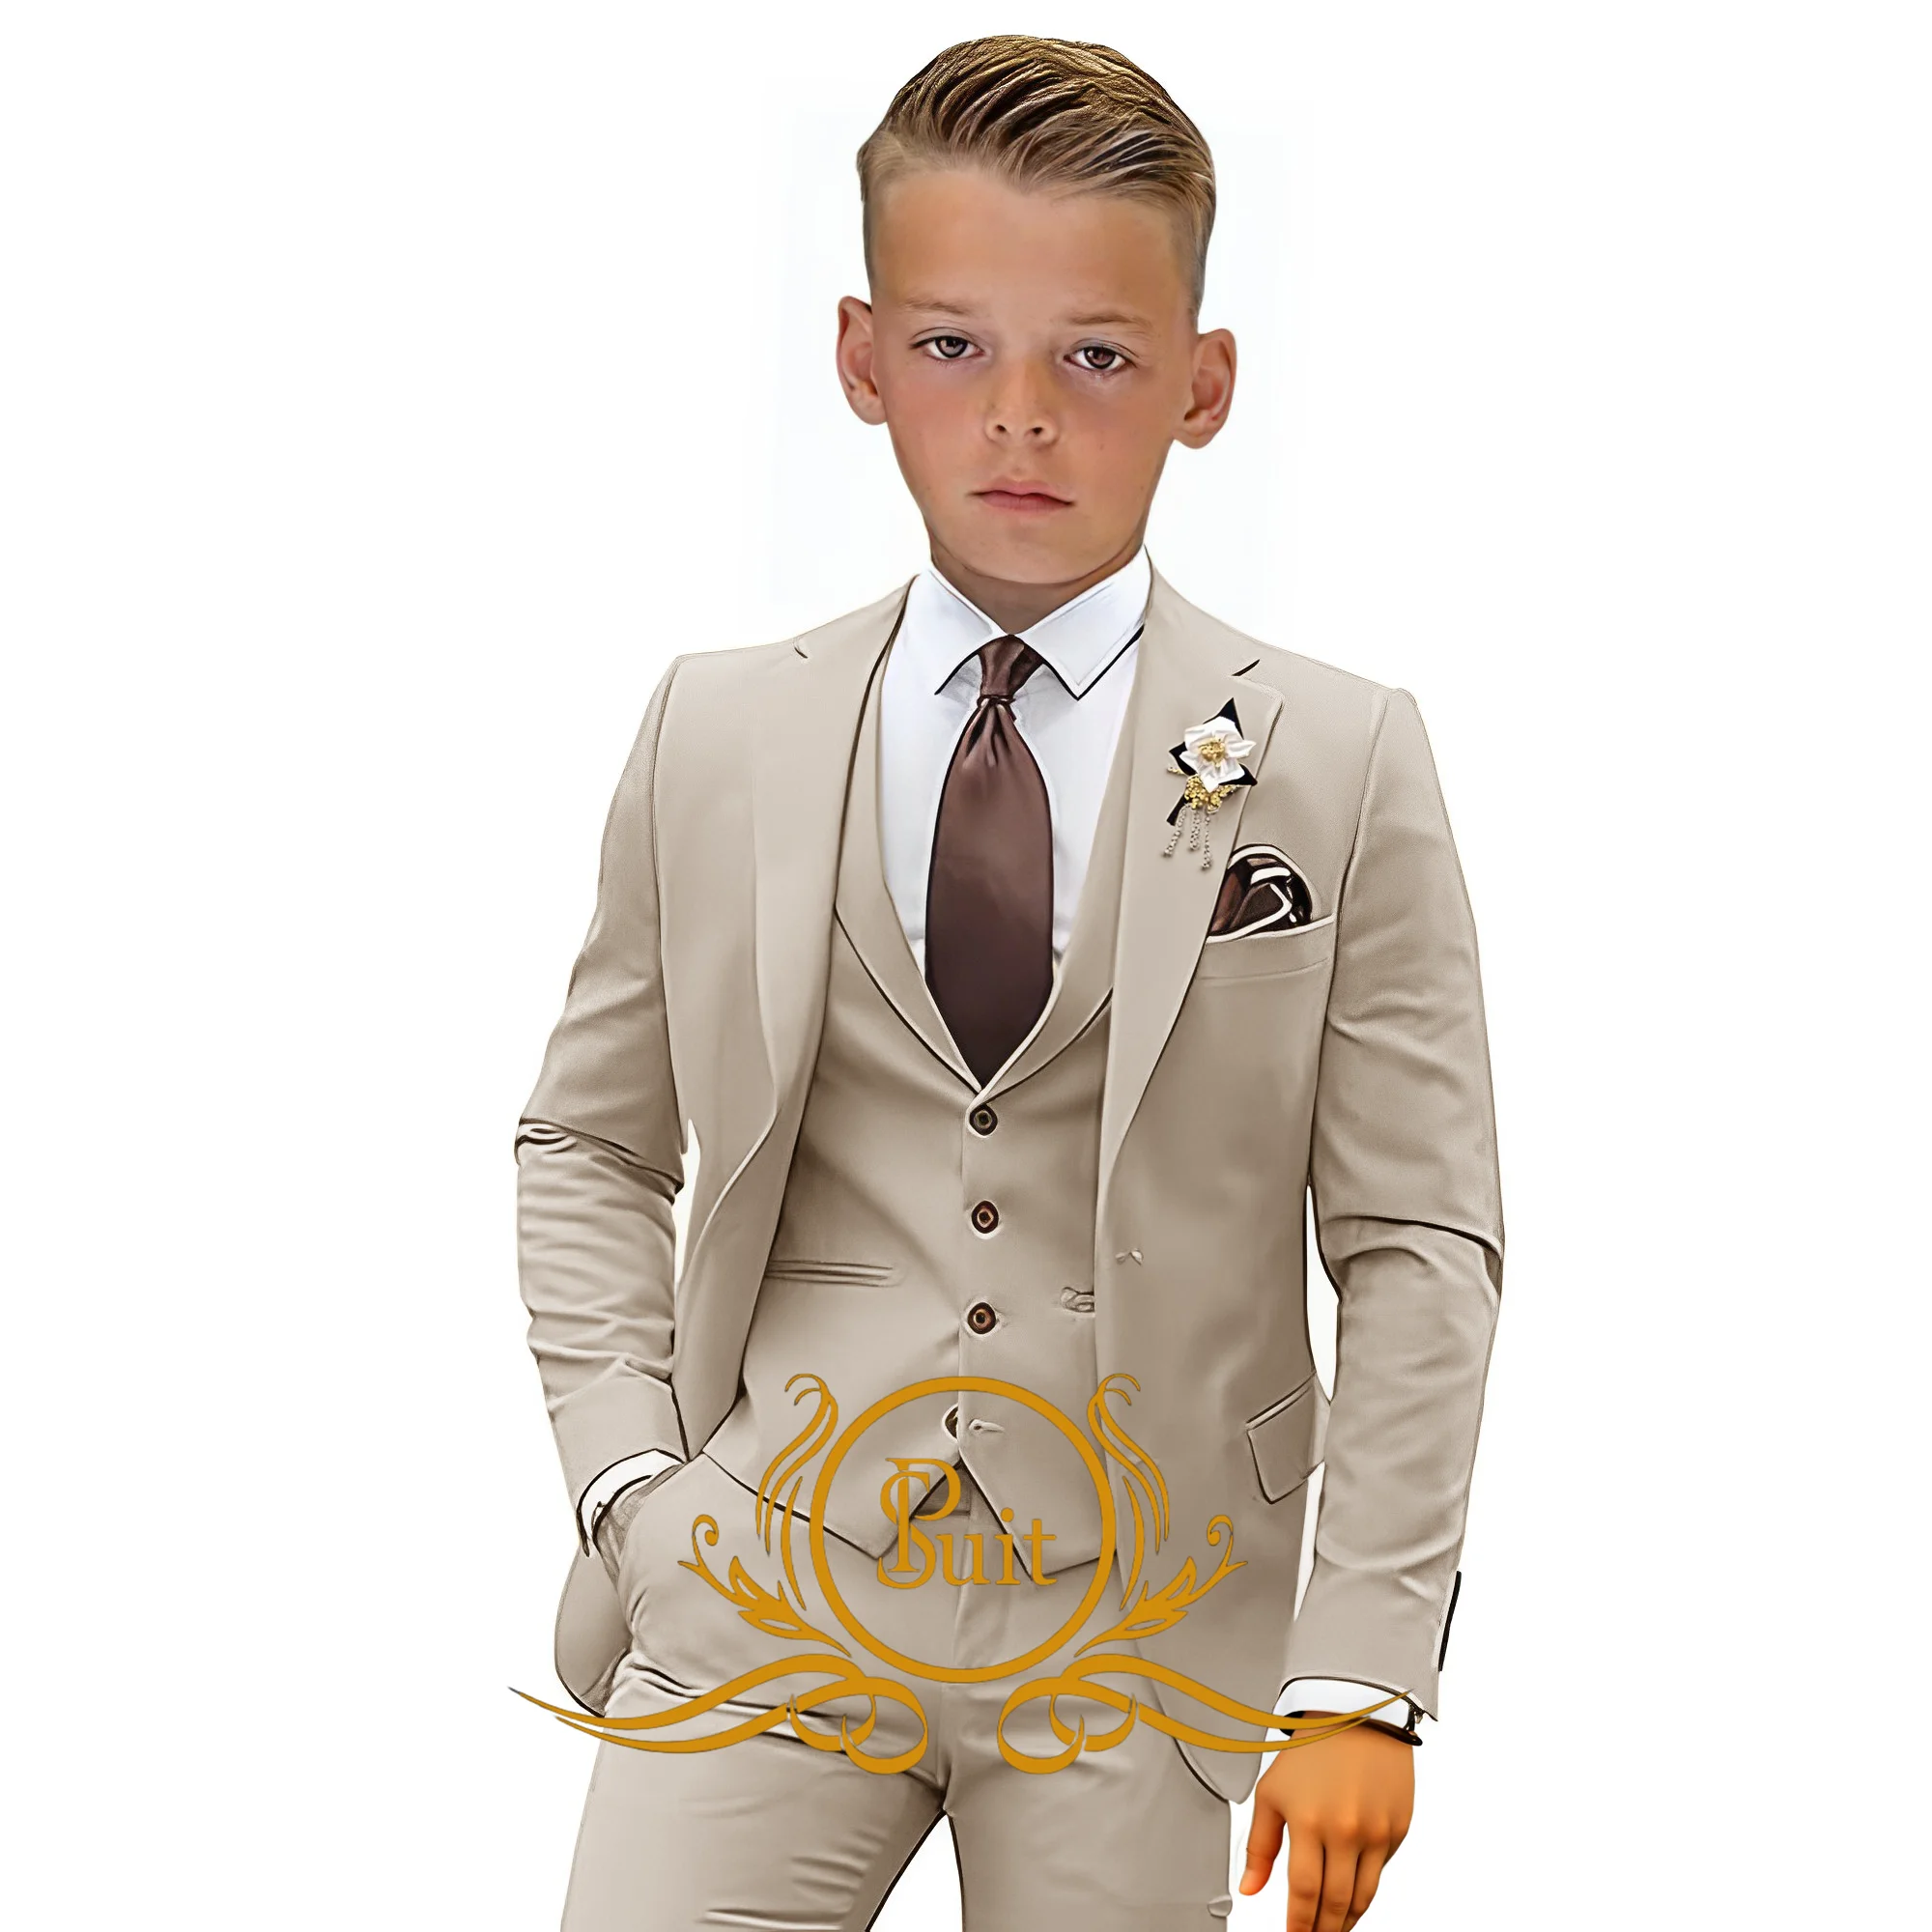 Boys Suit Wedding Tuxedo Jacket Pants Vest 3 Pieces Set Fashion 2-16 Years Old Complete Clothes for Kids